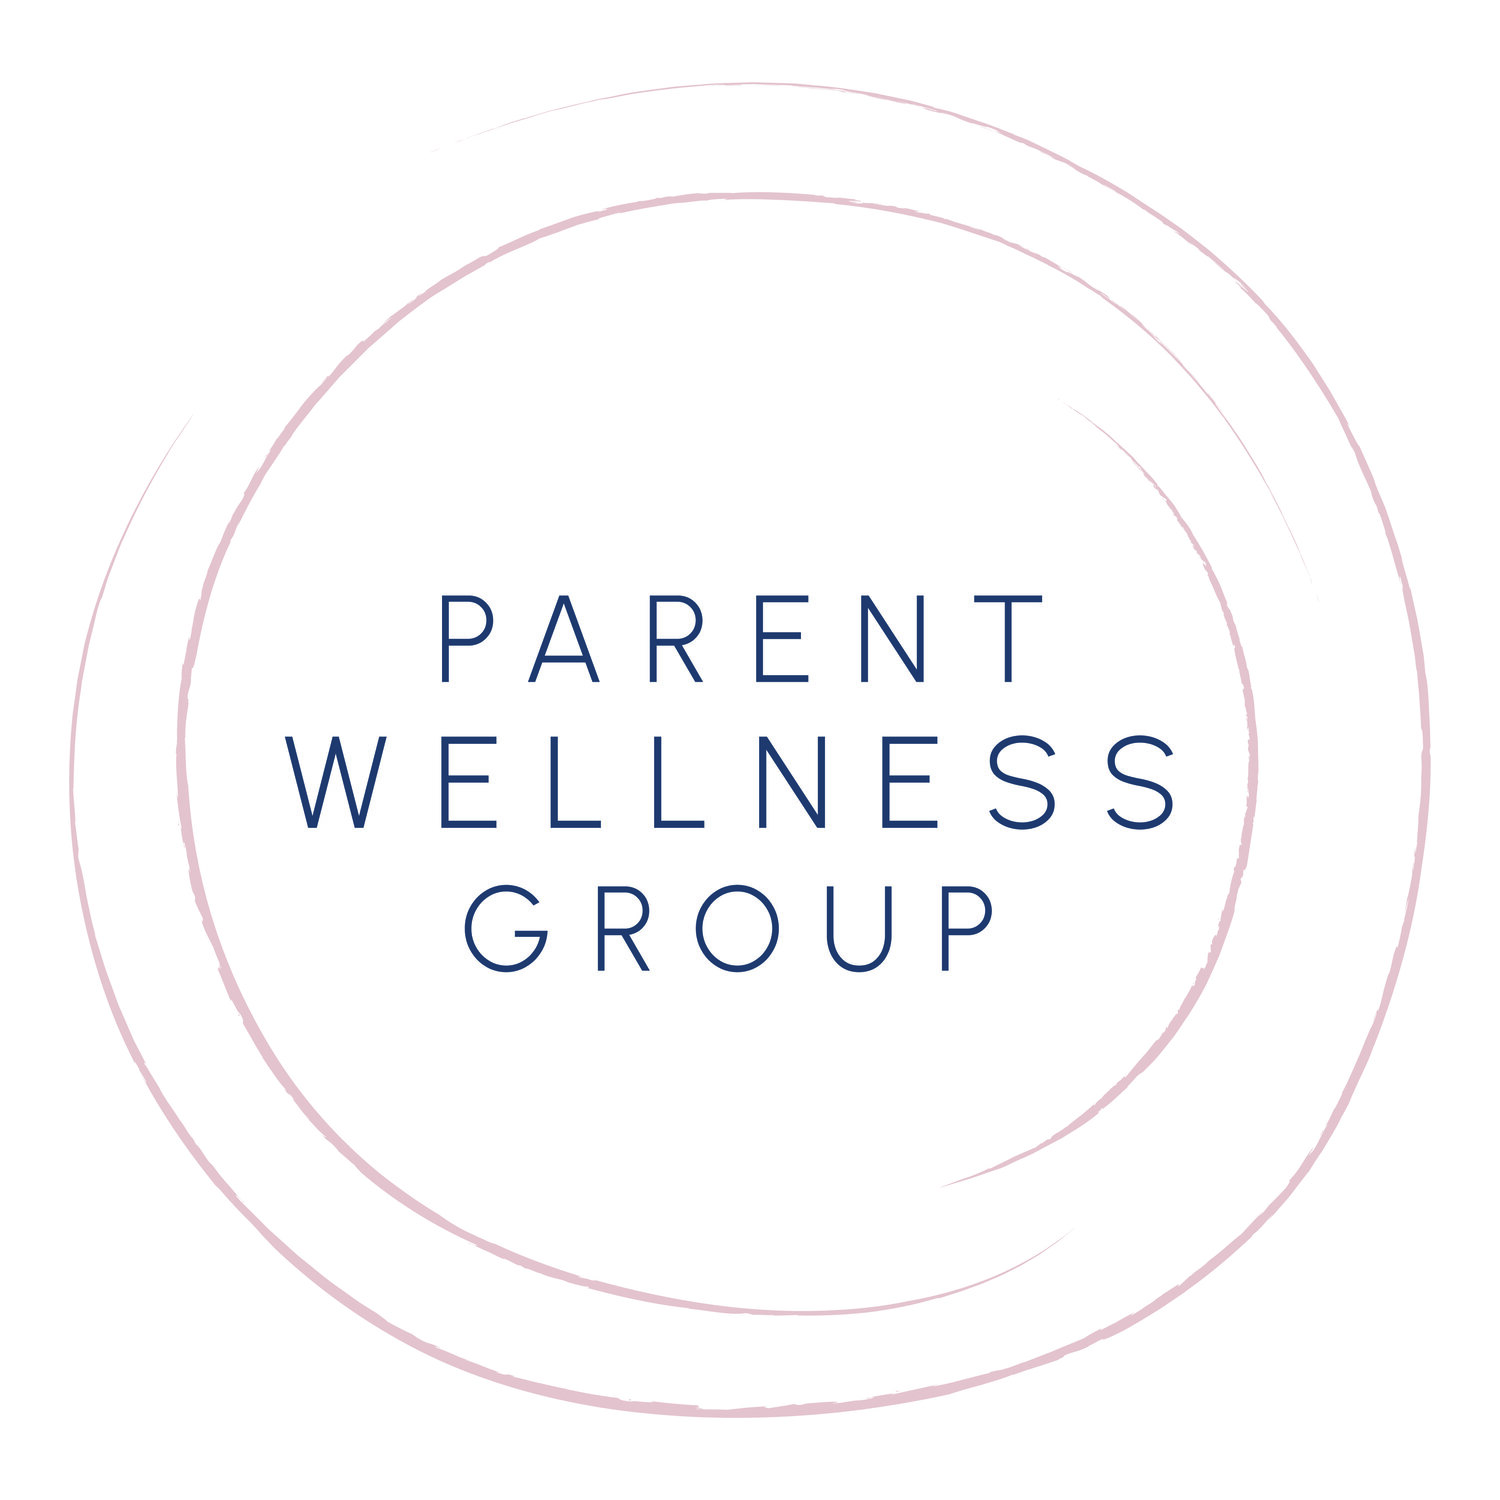 Postpartum Wellness Group